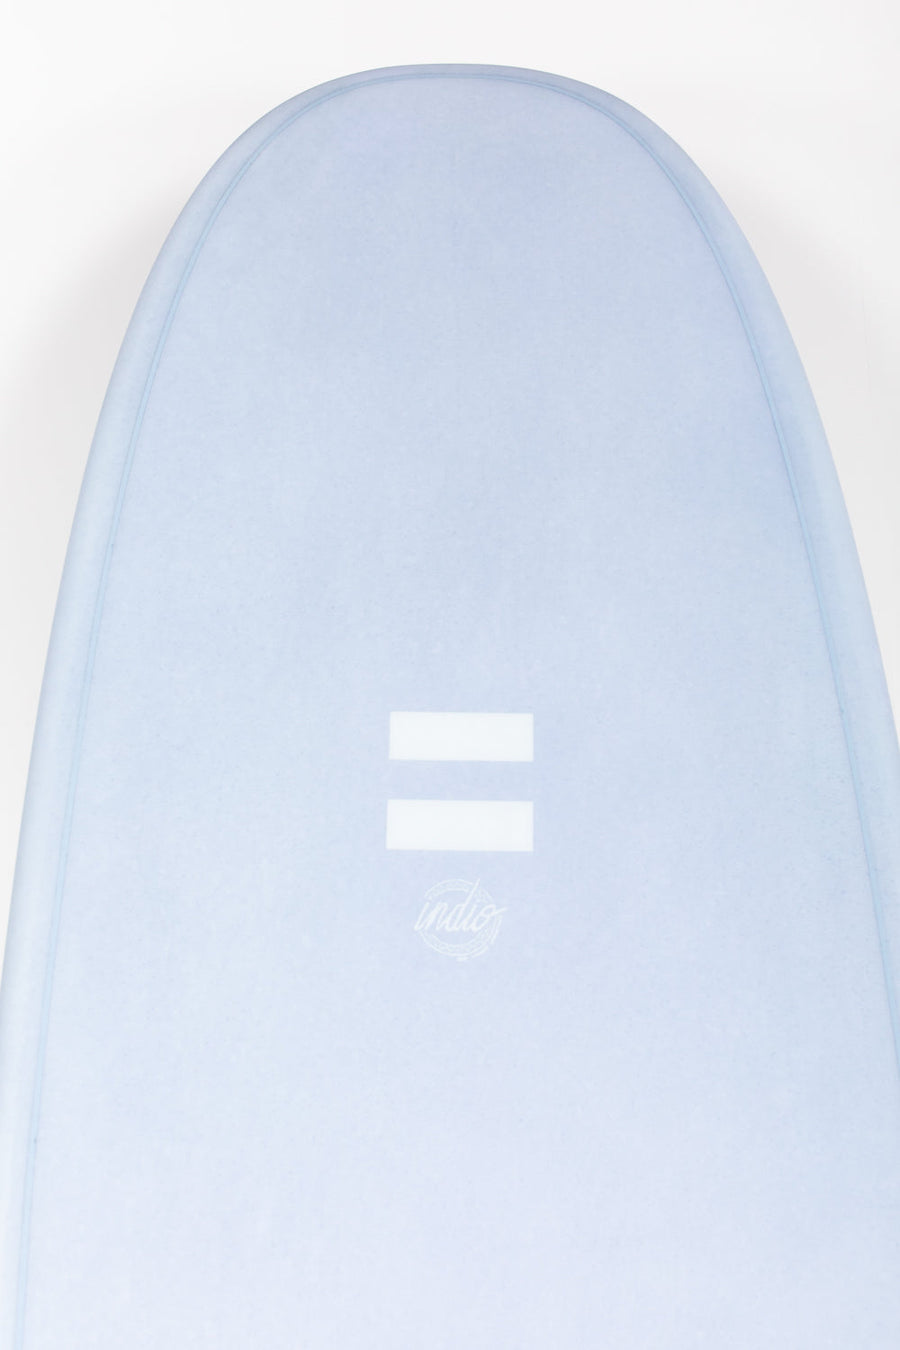 Indio Surfboards  MID LENGTH Light Blue 7´6